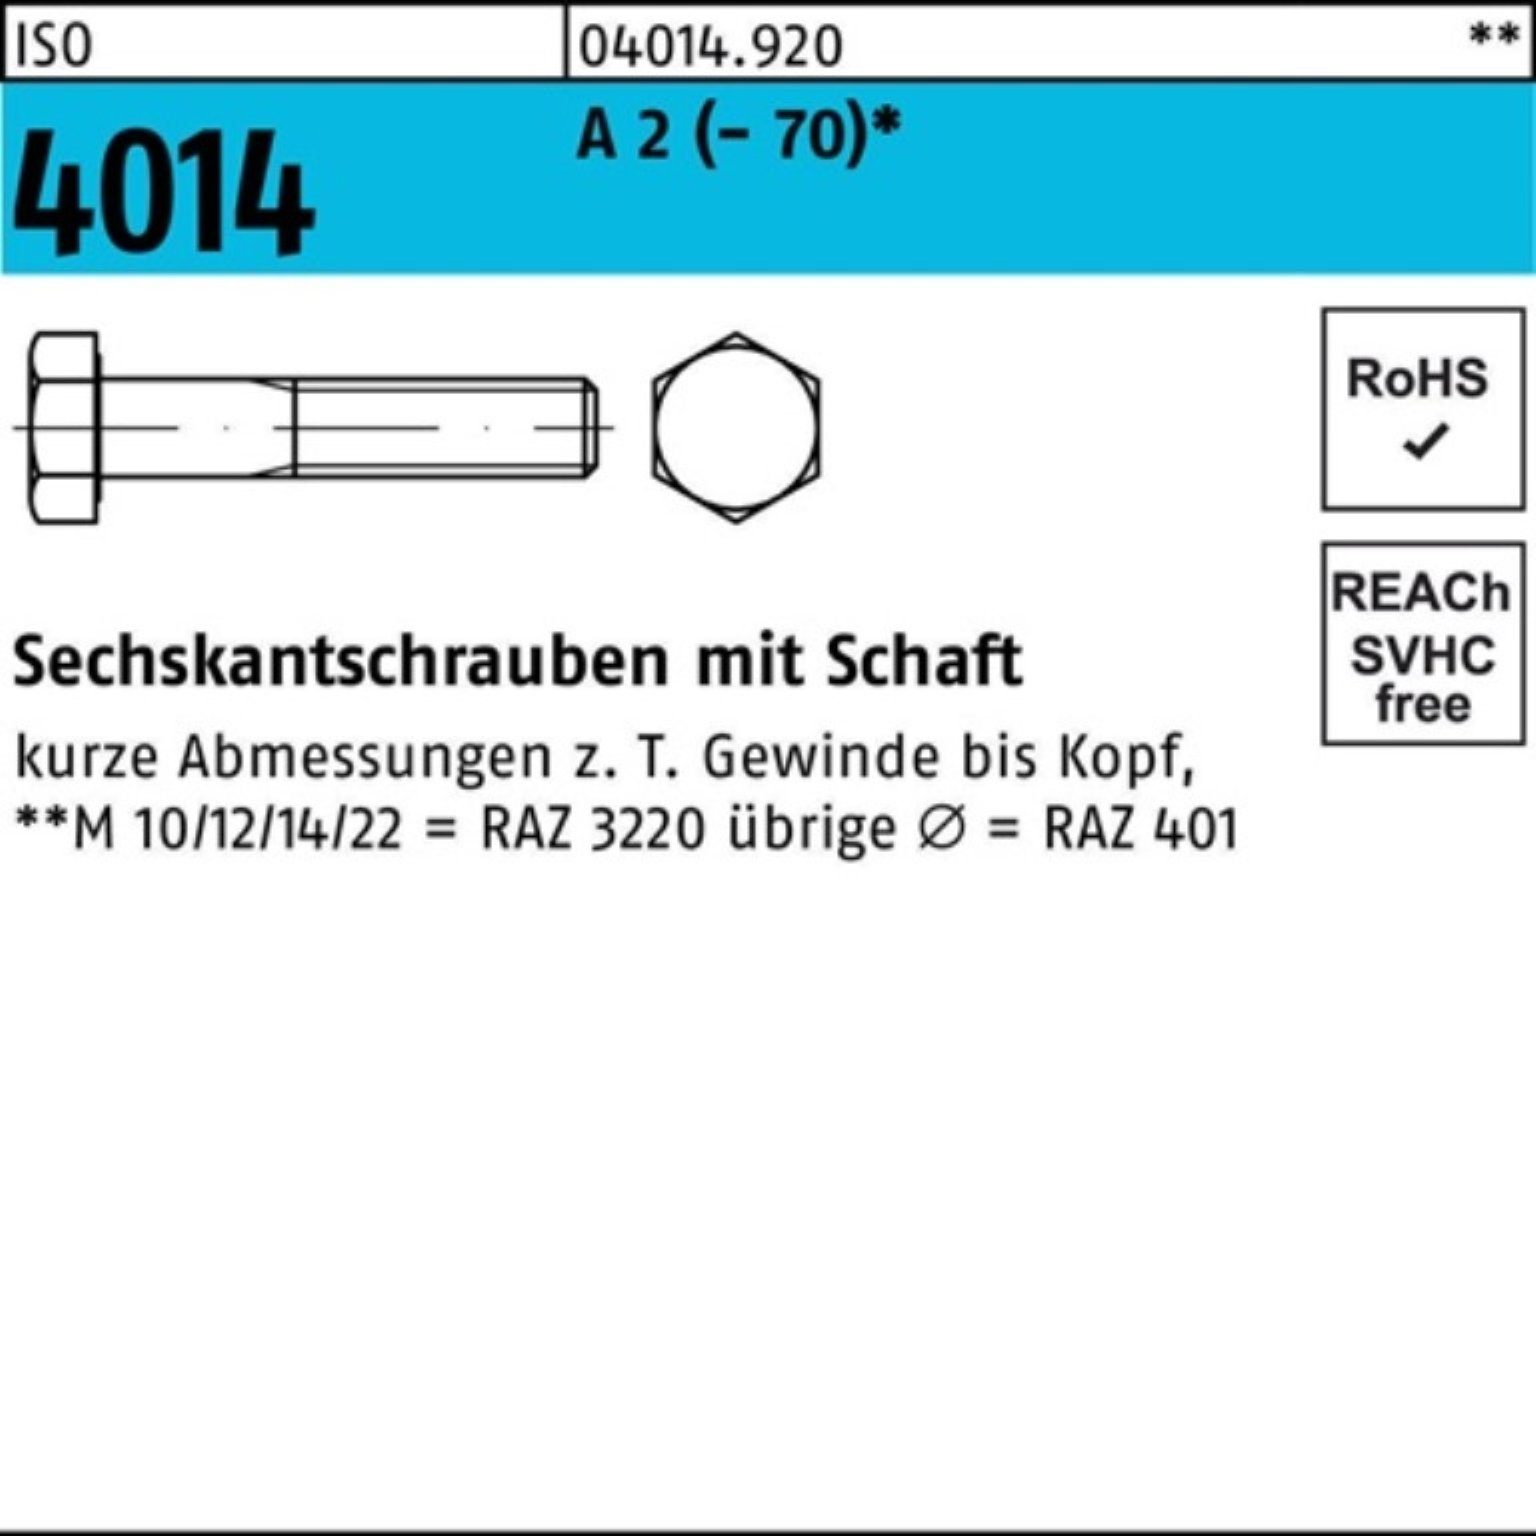 [Täglich zur Bestellung geöffnet] Bufab Sechskantschraube Pack 100er Schaft St ISO 2 M24x 140 1 (70) 4014 A Sechskantschraube